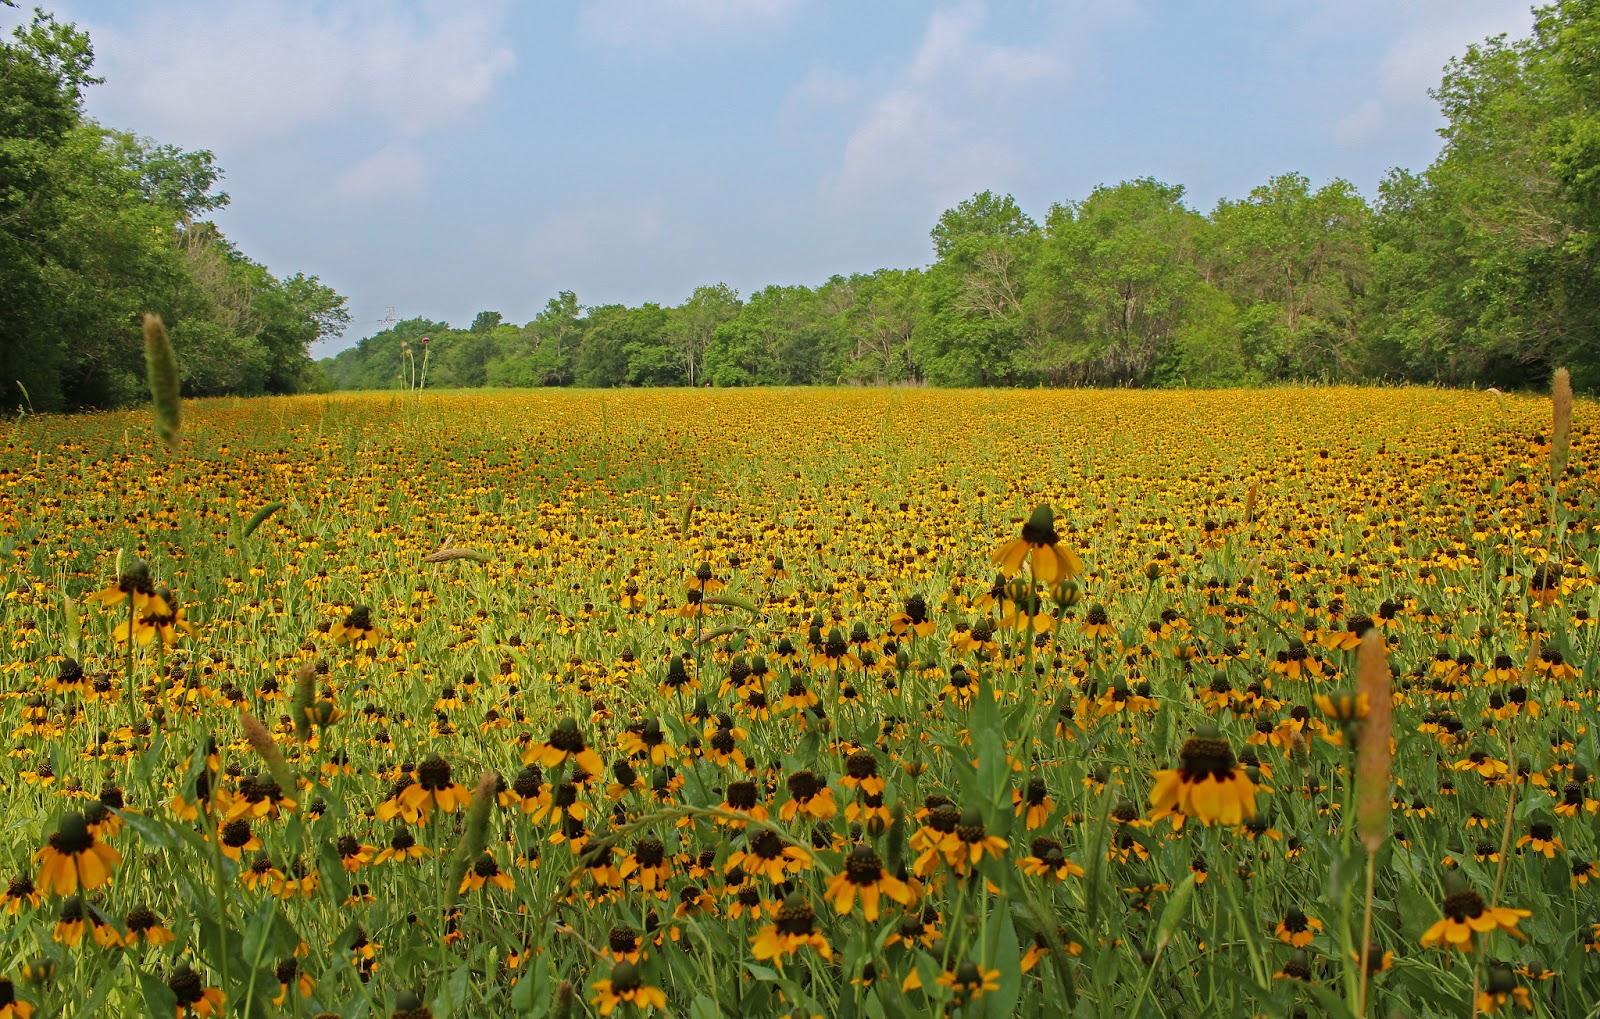 Dallas Trinity Trails: The Largest Wildflower Meadow in Dallas